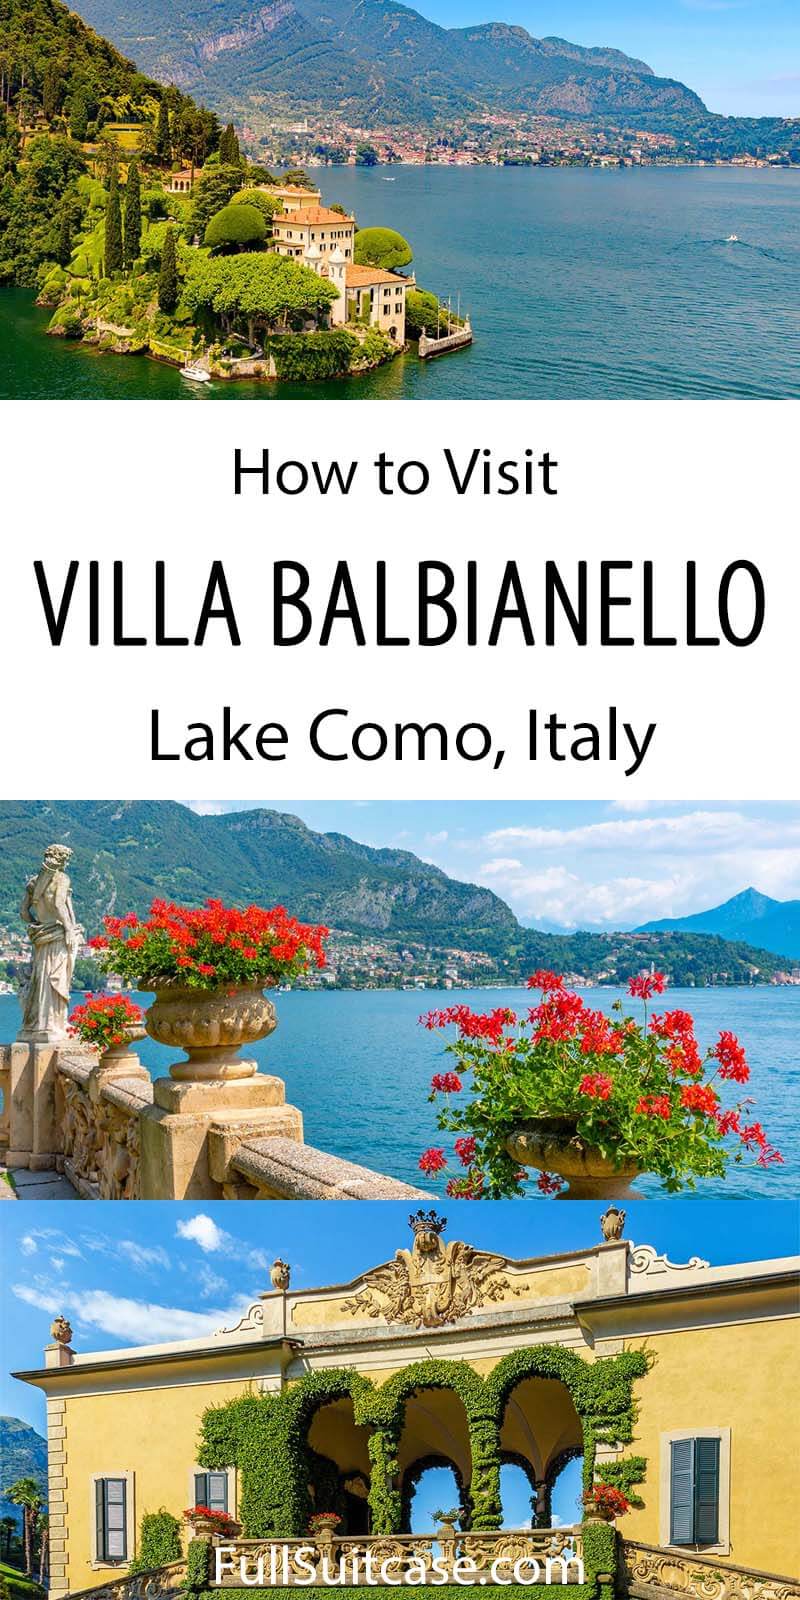 How to visit Villa Balbianello, Lake Como, Italy